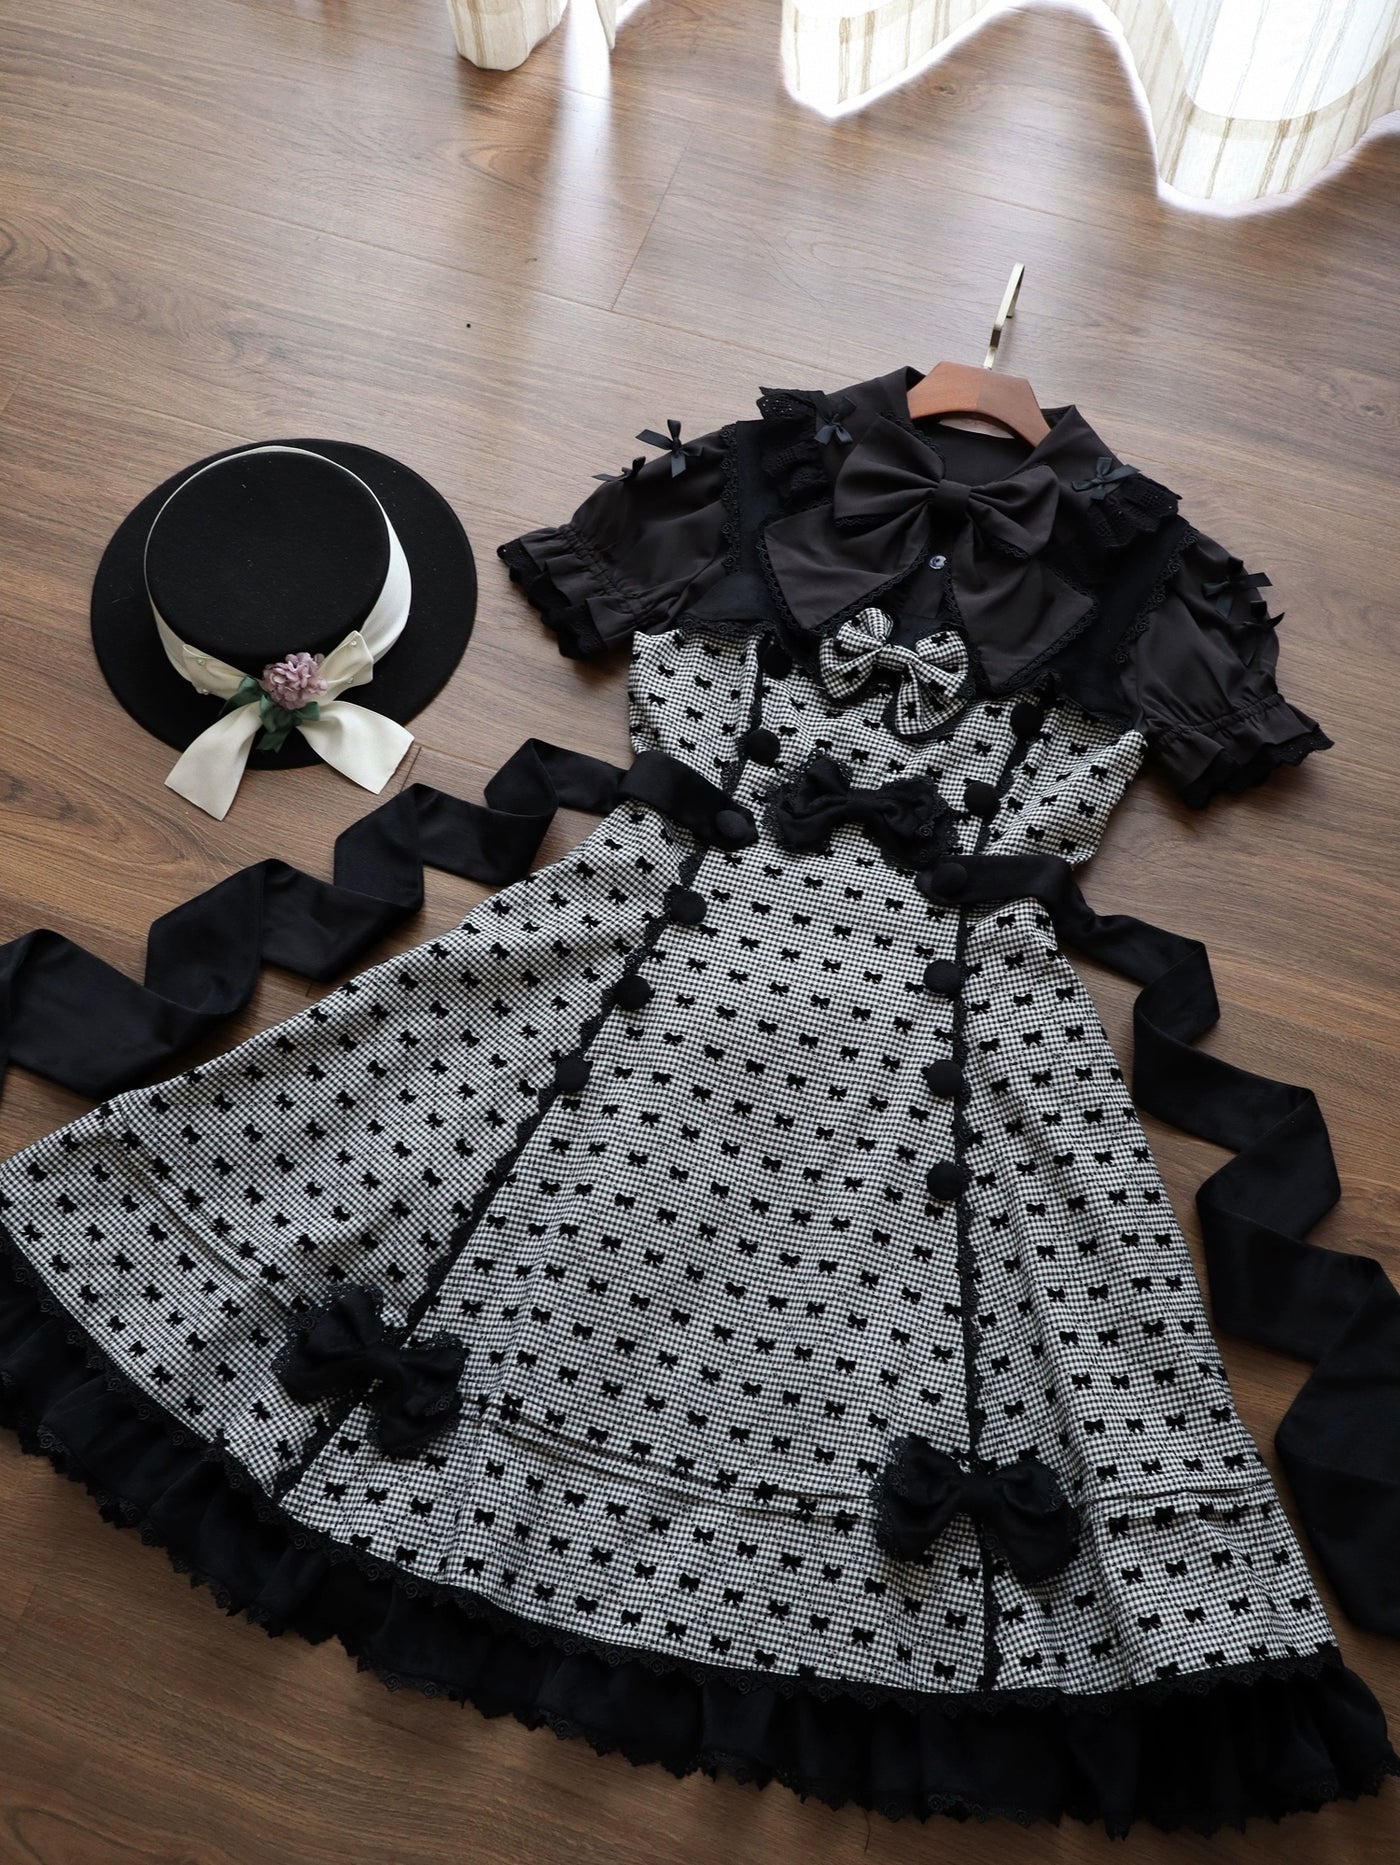 Nn Star~Coconut Crisp Stars~Gothic Lolita Shirt Black Blouse Hime Sleeve   